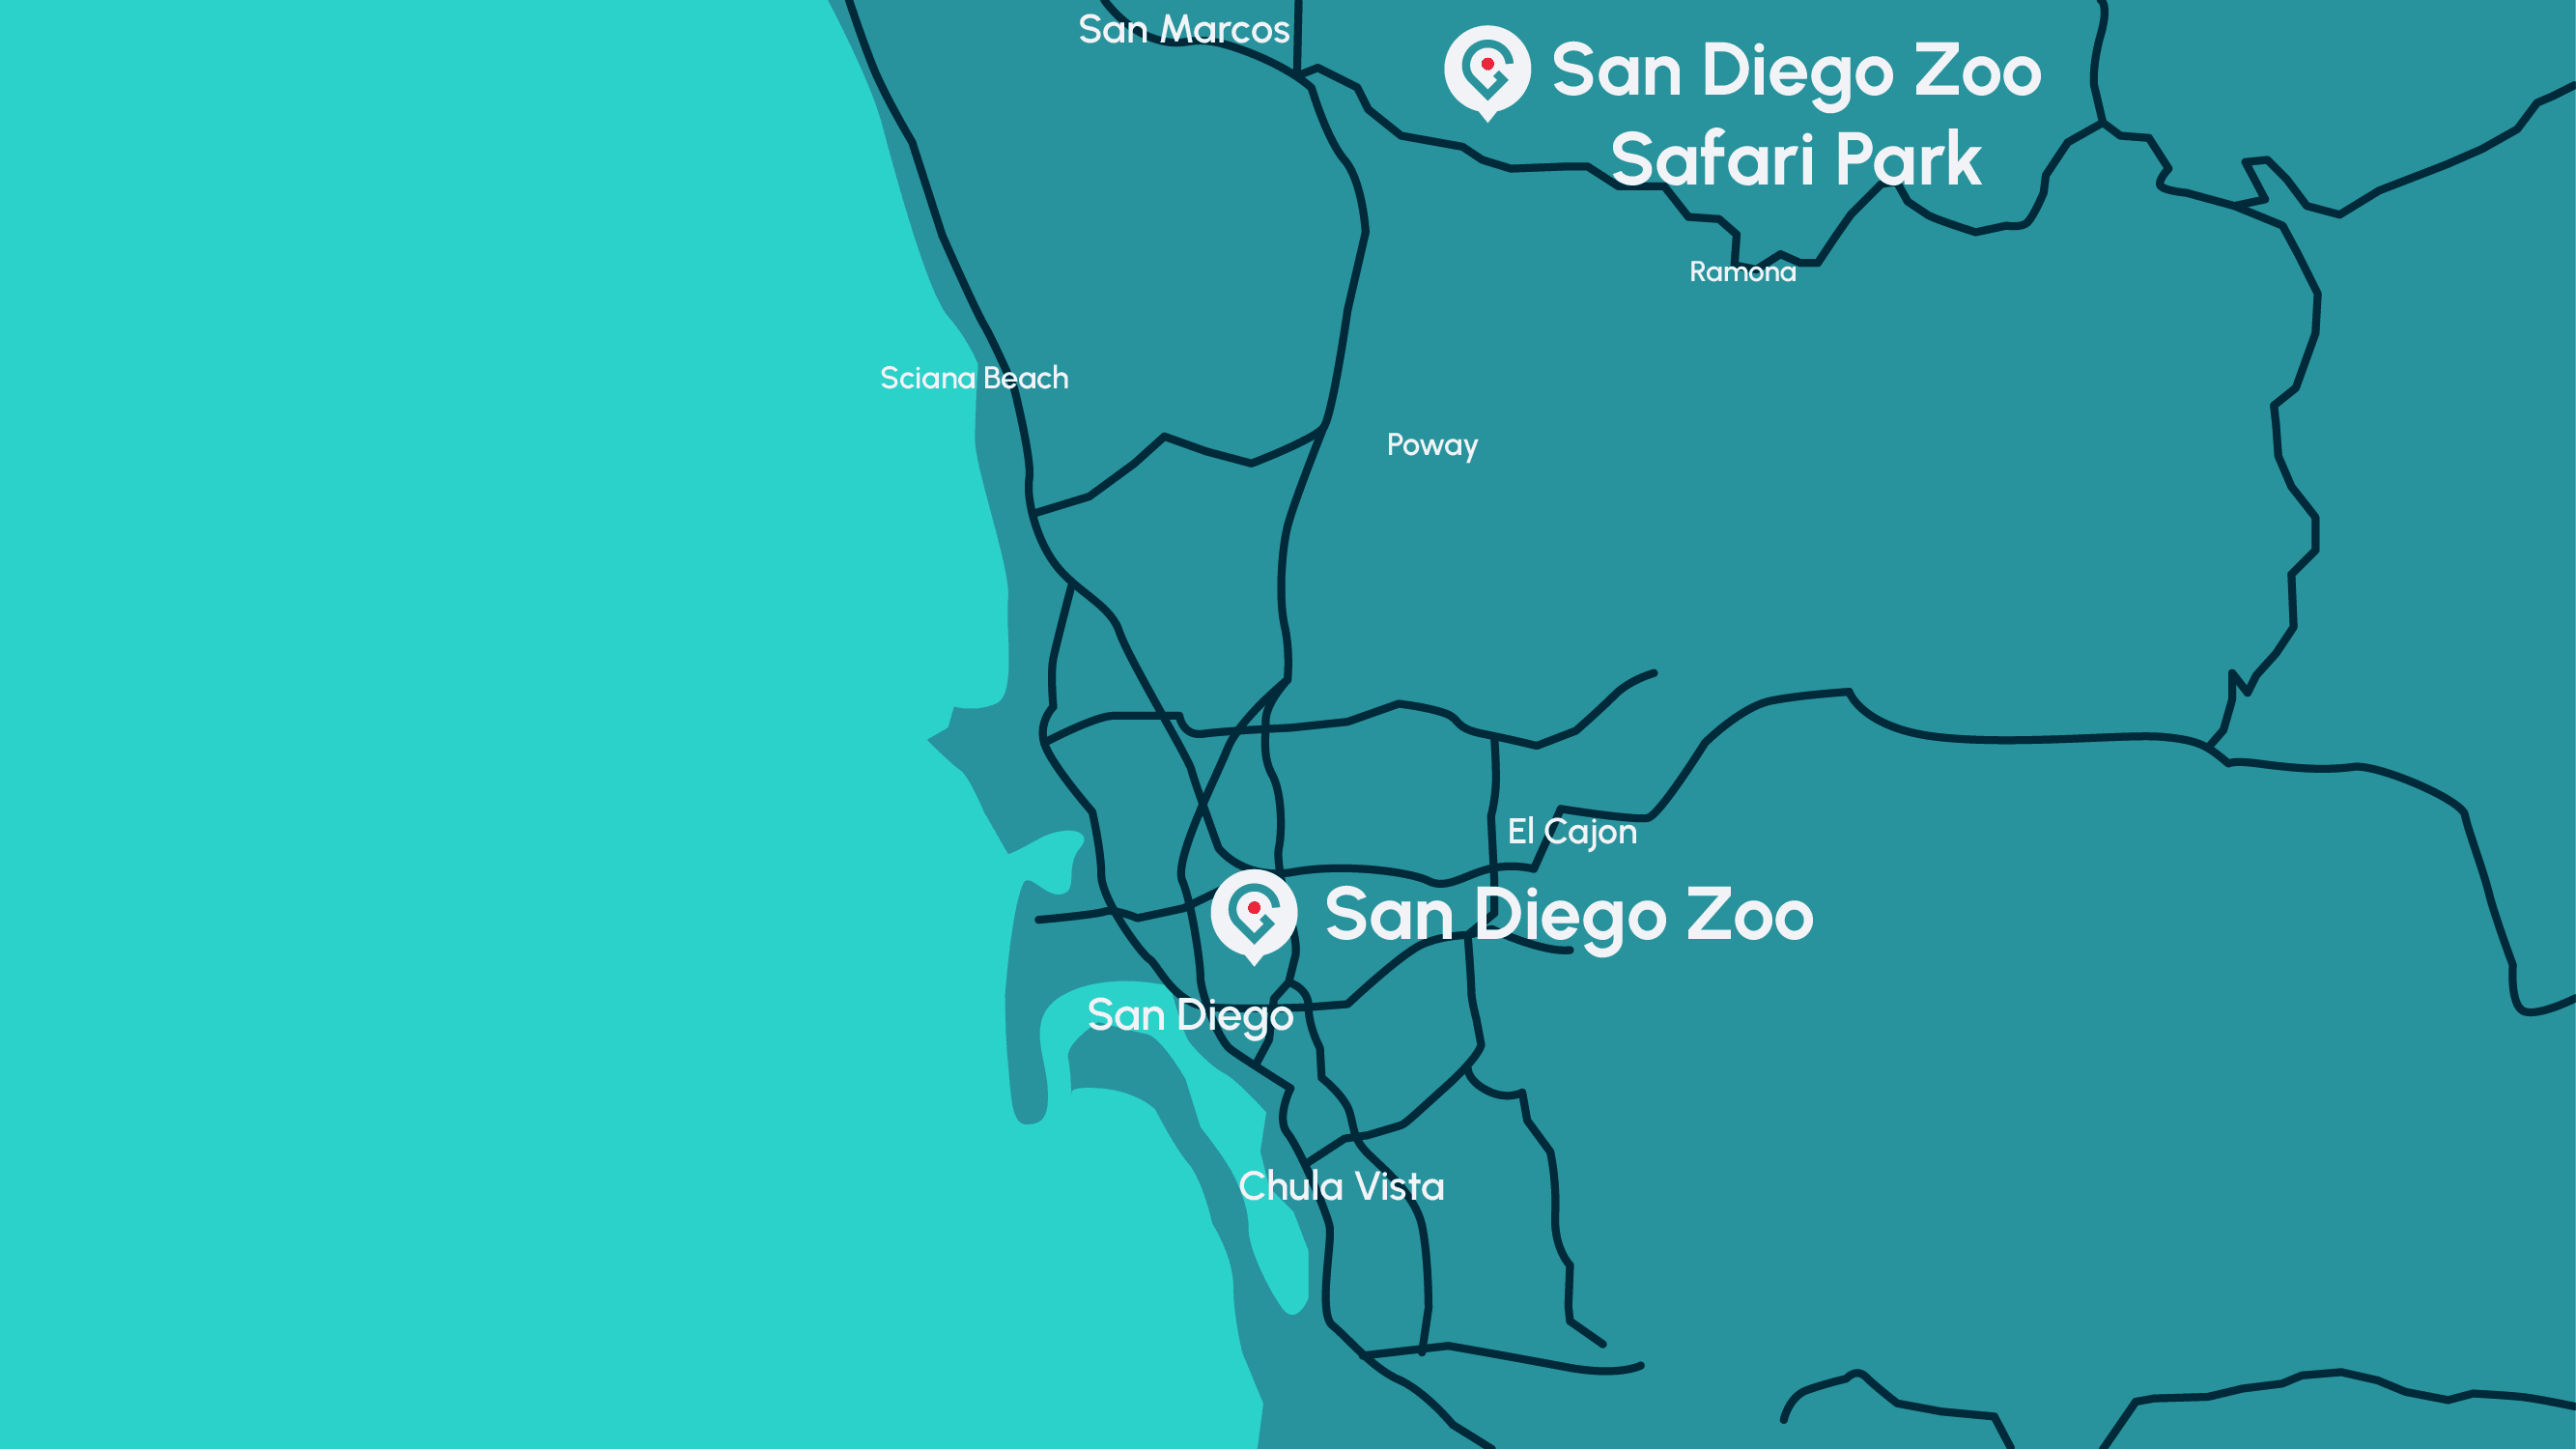 San Diego Zoo vs Safari Park